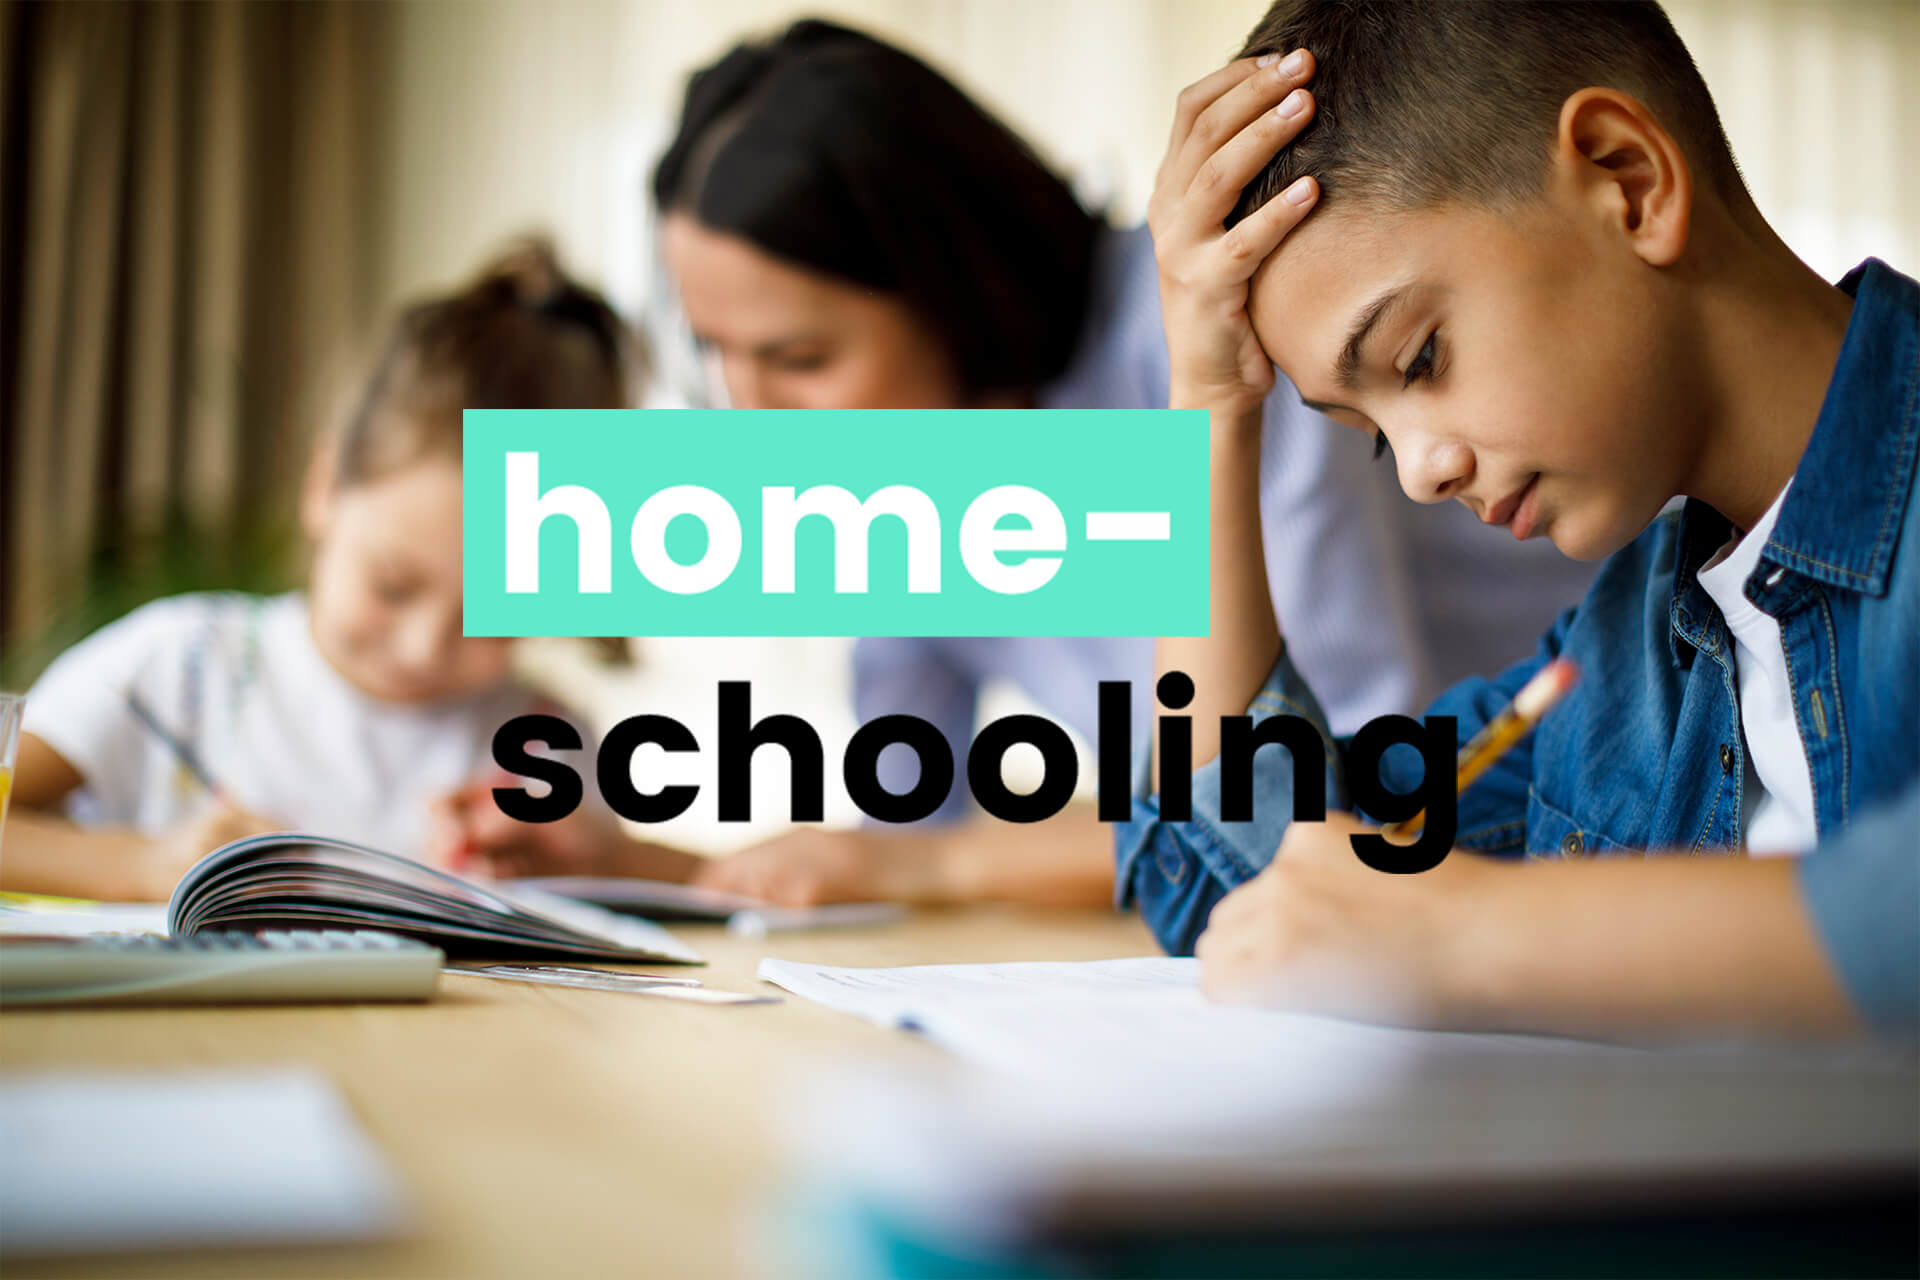 (c) Homeschooling-corona.com